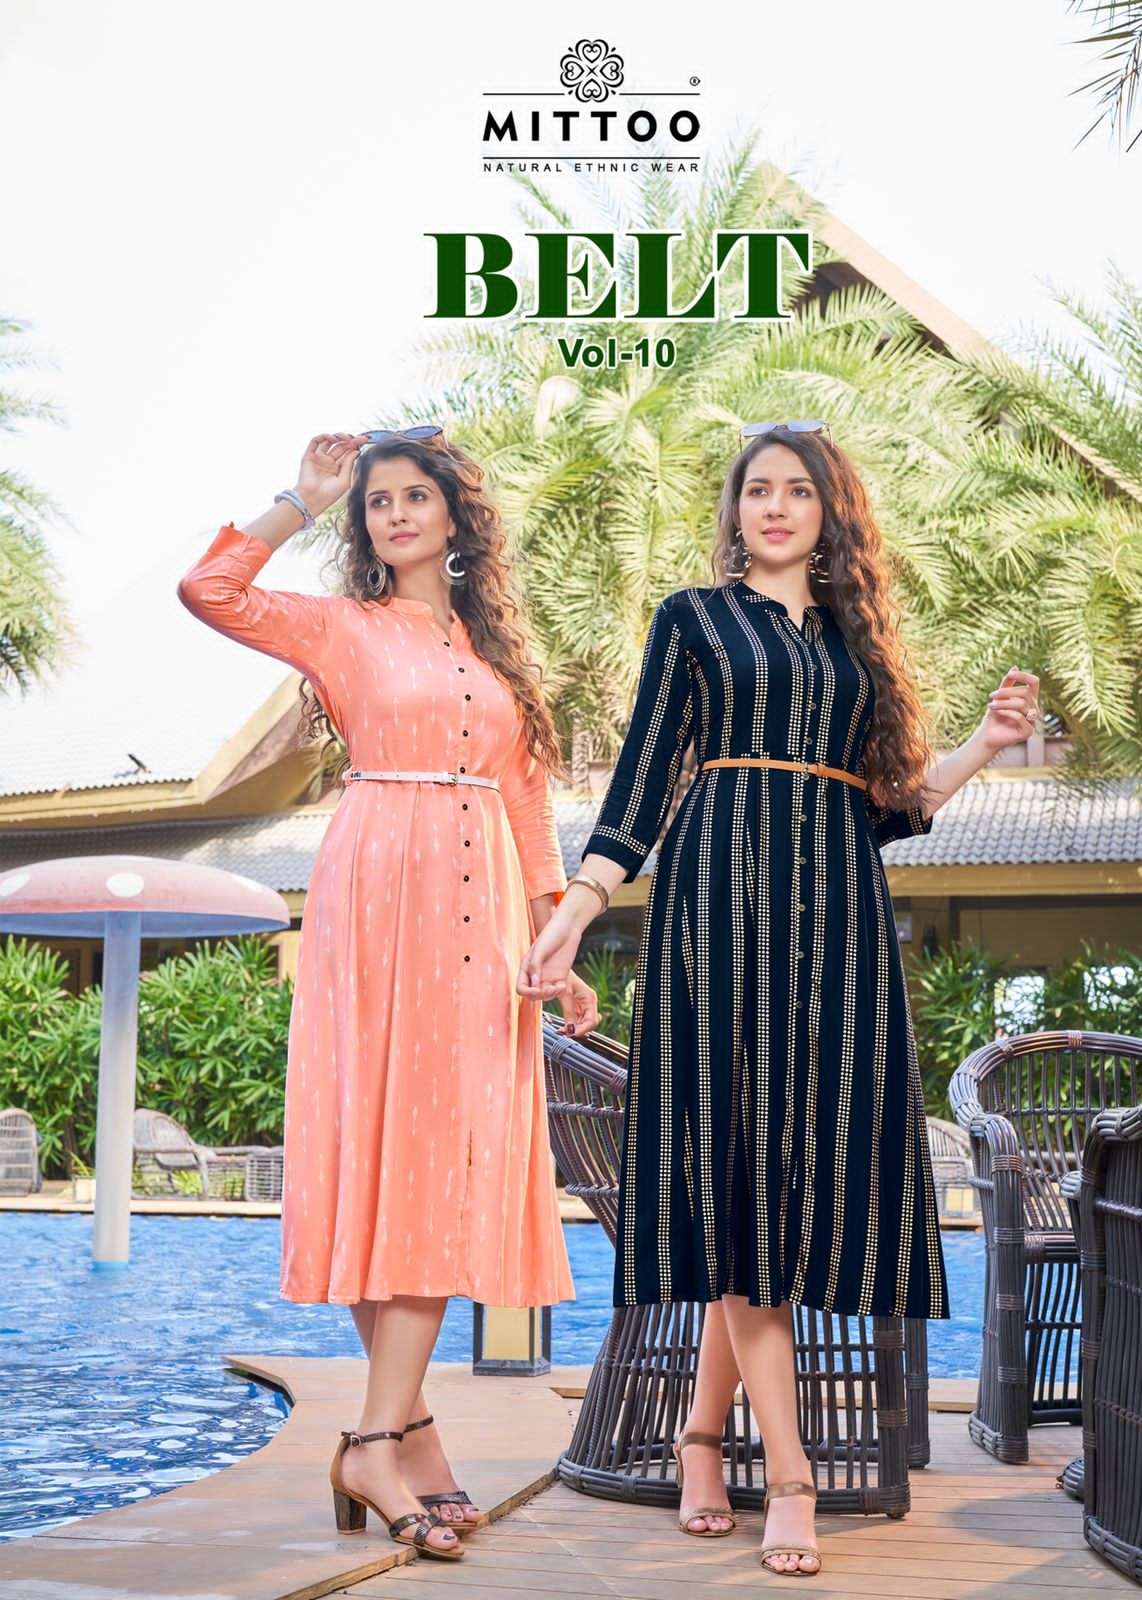 mittoo belt vol 10 1118-1123 series trendy designer kurti catalogue wholesale price surat 